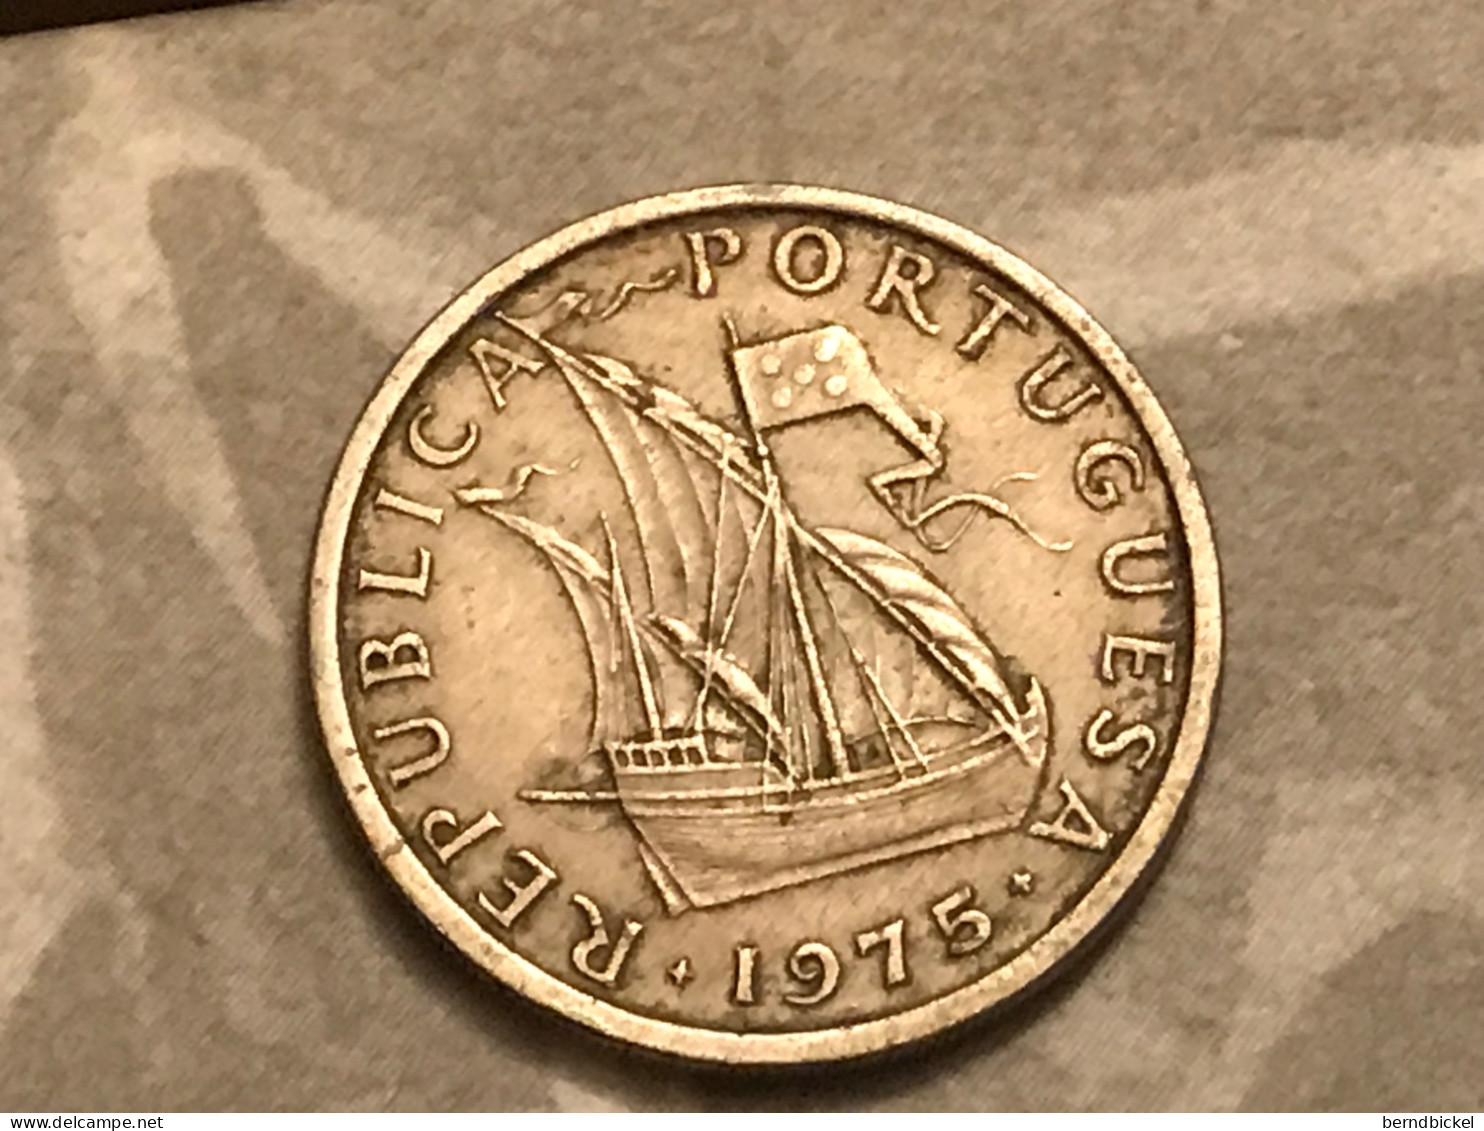 Münze Münzen Umlaufmünze Portugal 5 Escudos 1975 - Portugal